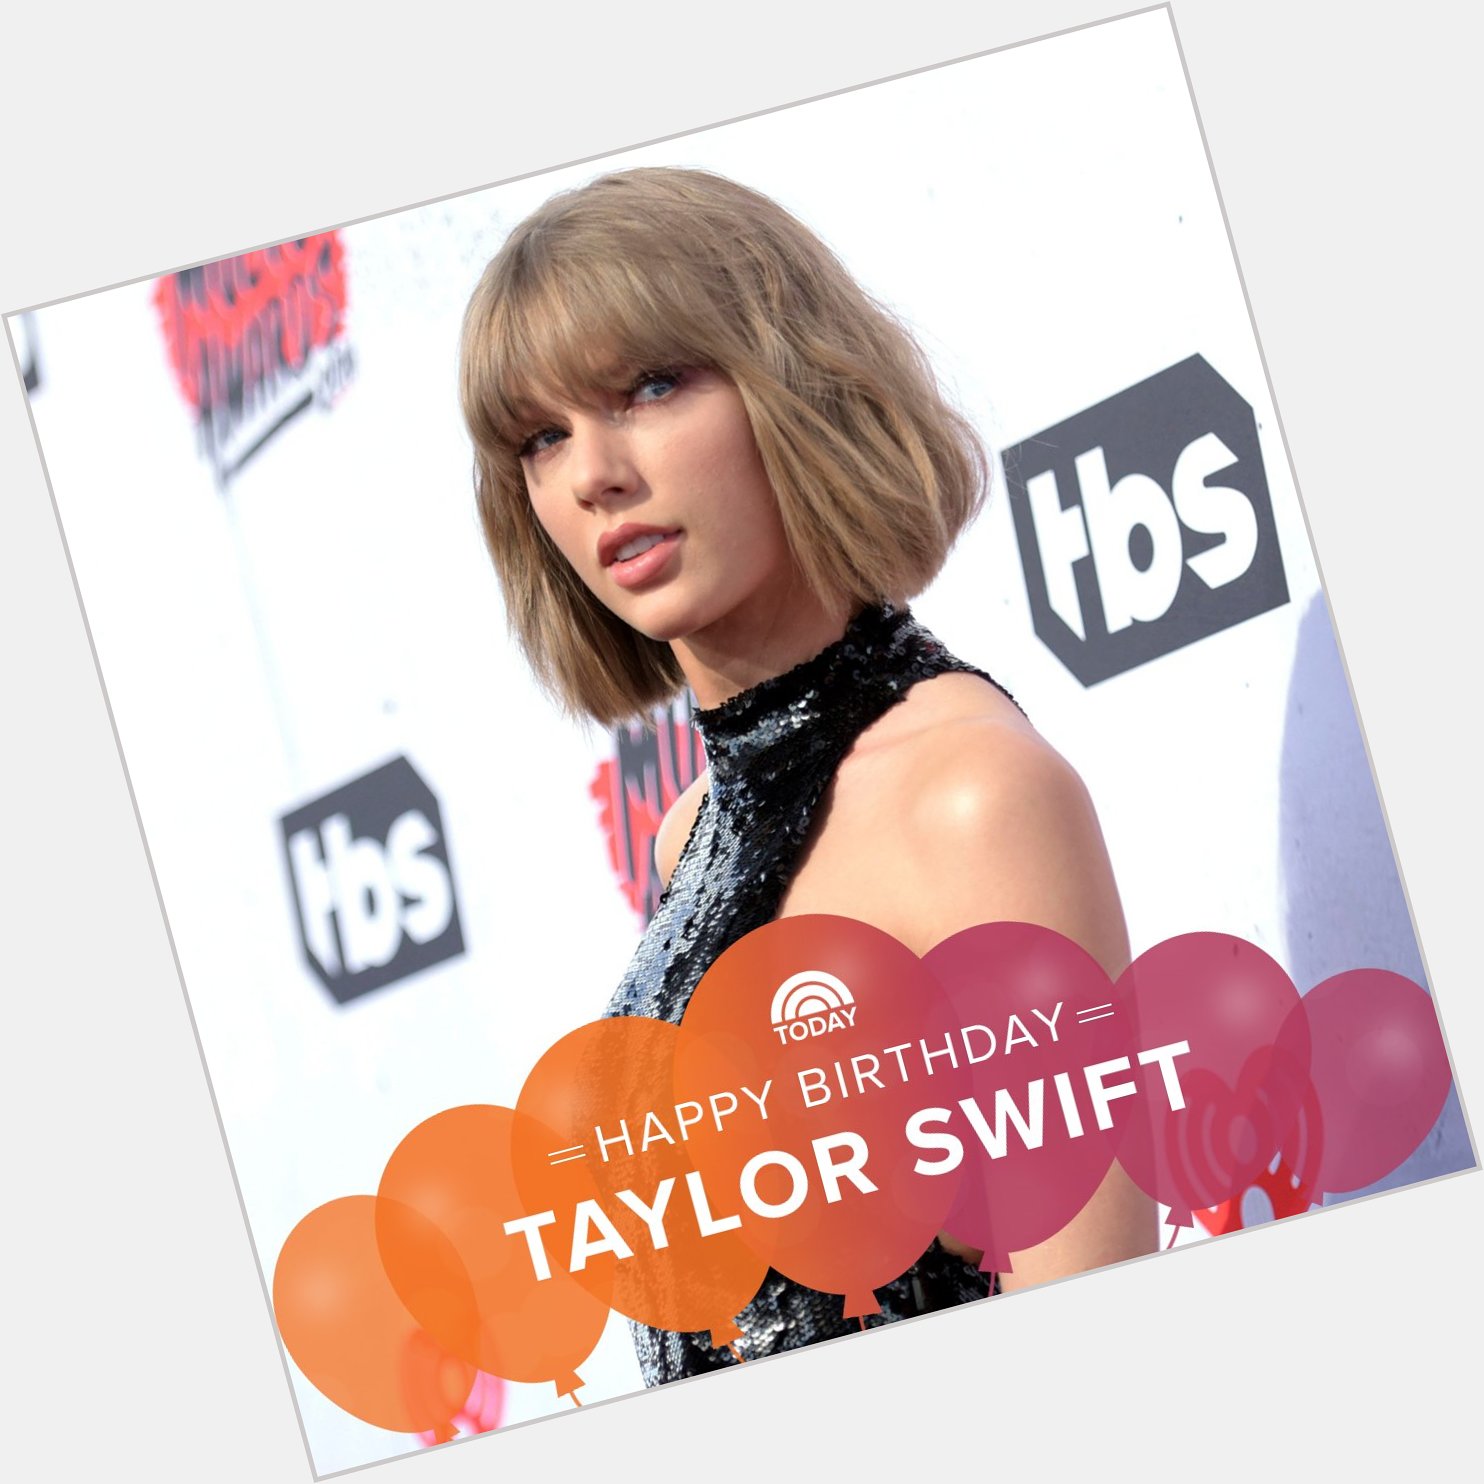 Happy birthday, Taylor Swift! 